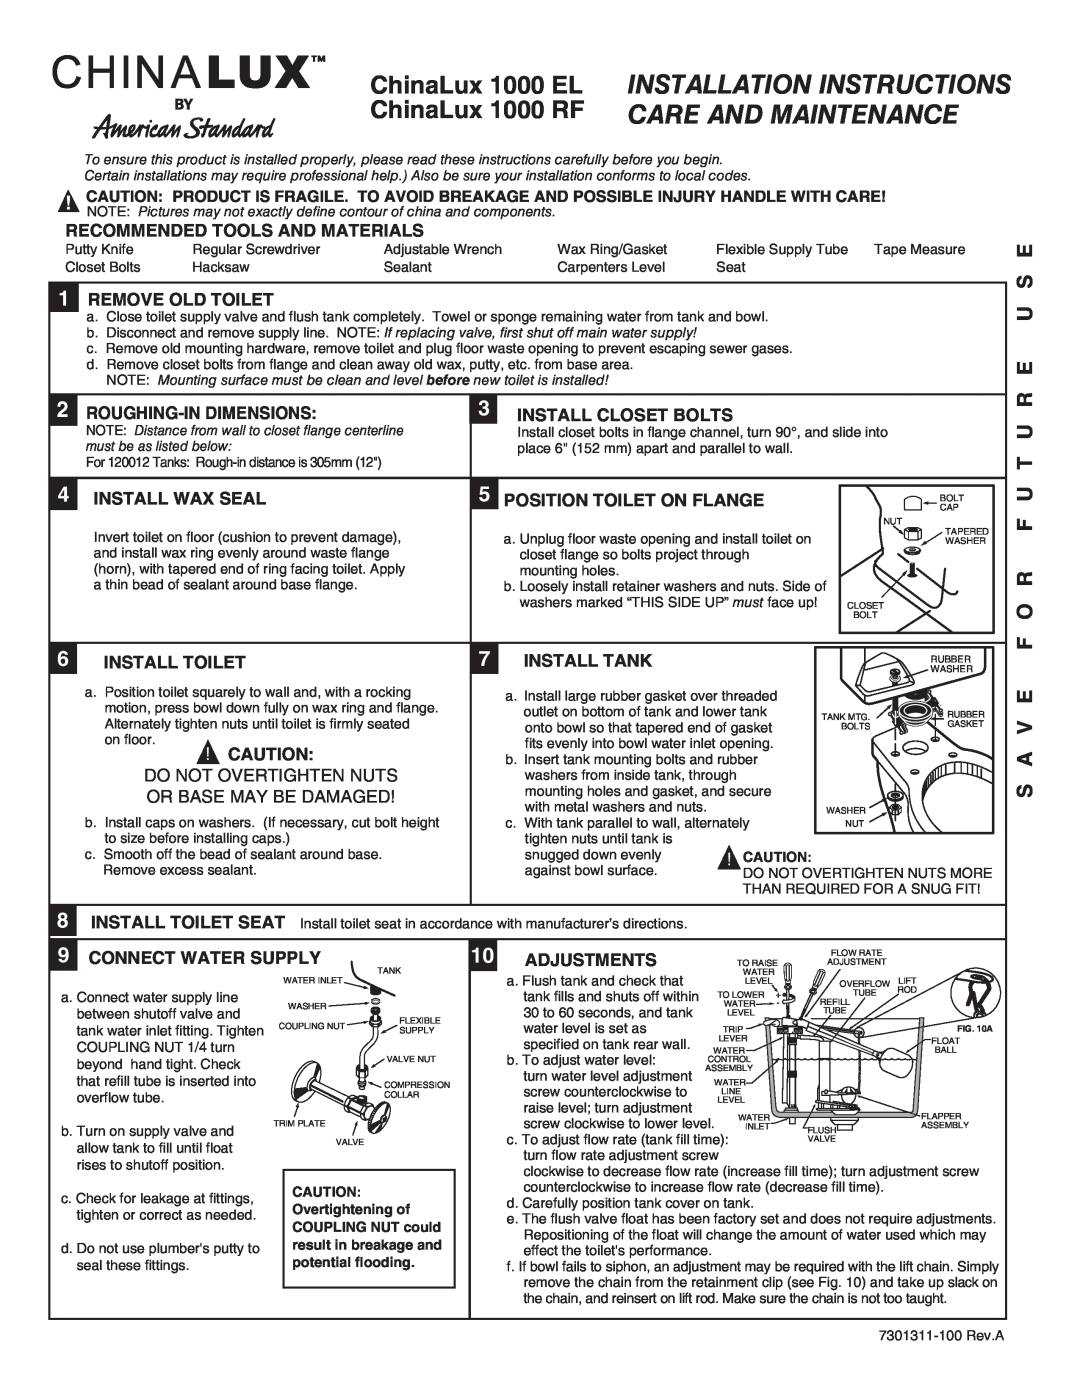 American Standard 1000 RF installation instructions S A V E F O R F U T U R E U S E, Do Not Overtighten Nuts 